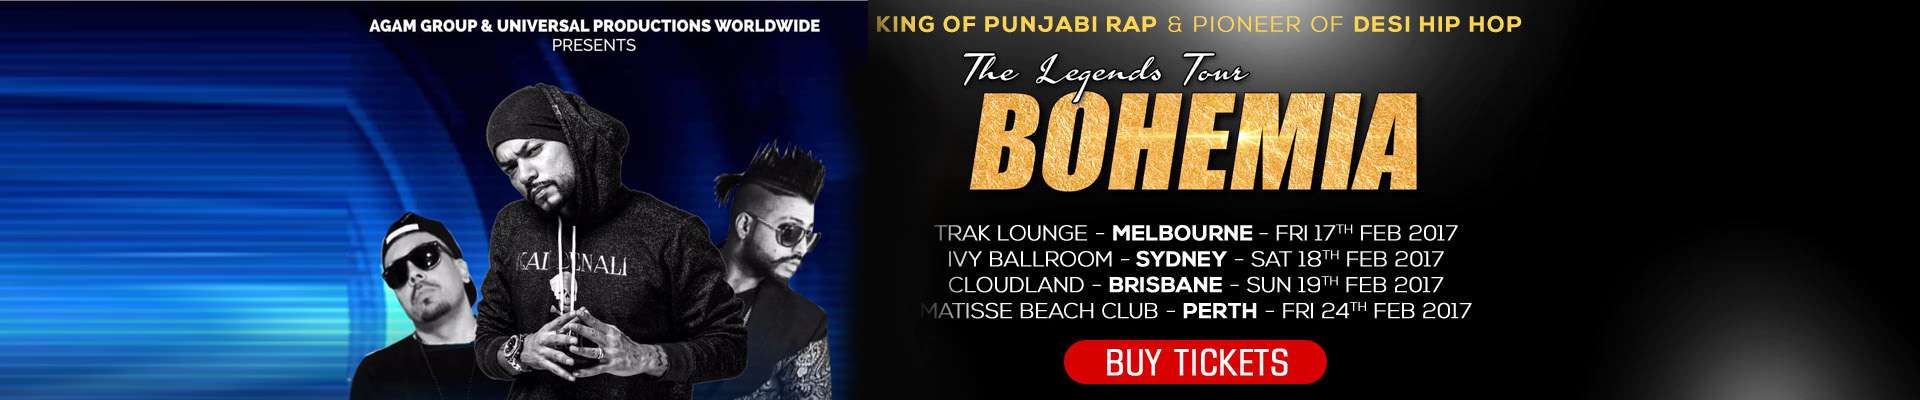 The Legend Bohemia Live In Perth 2017